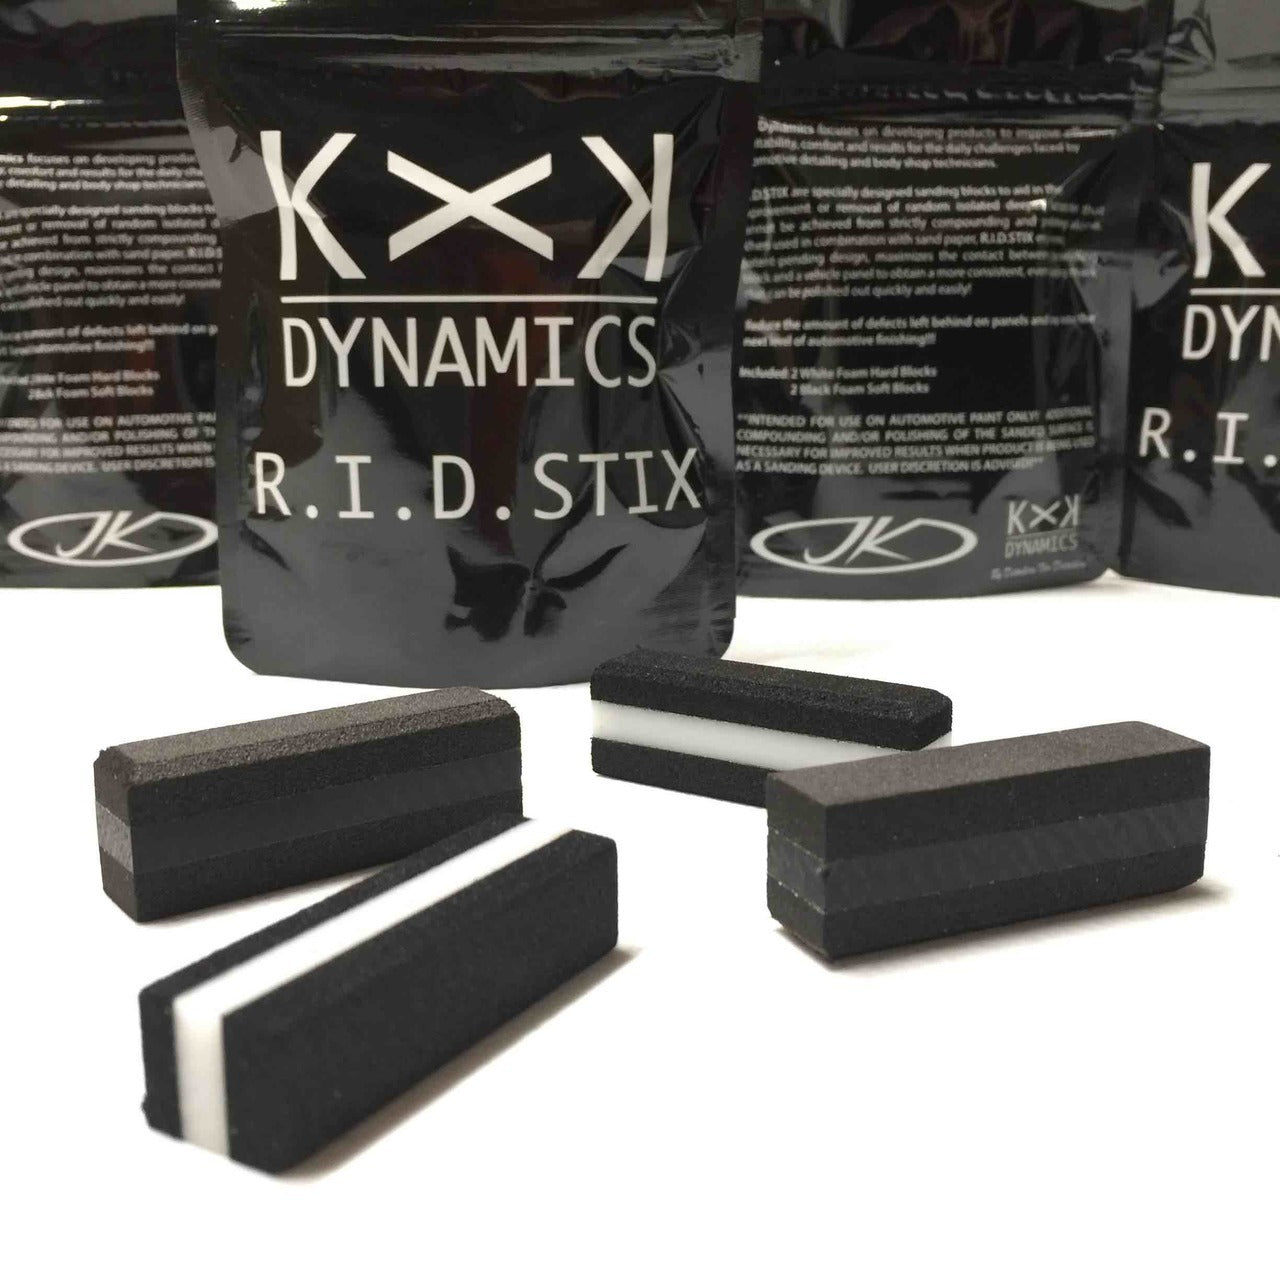 KXK Dynamics RID STIX Sanding Blocks Passion Detailing